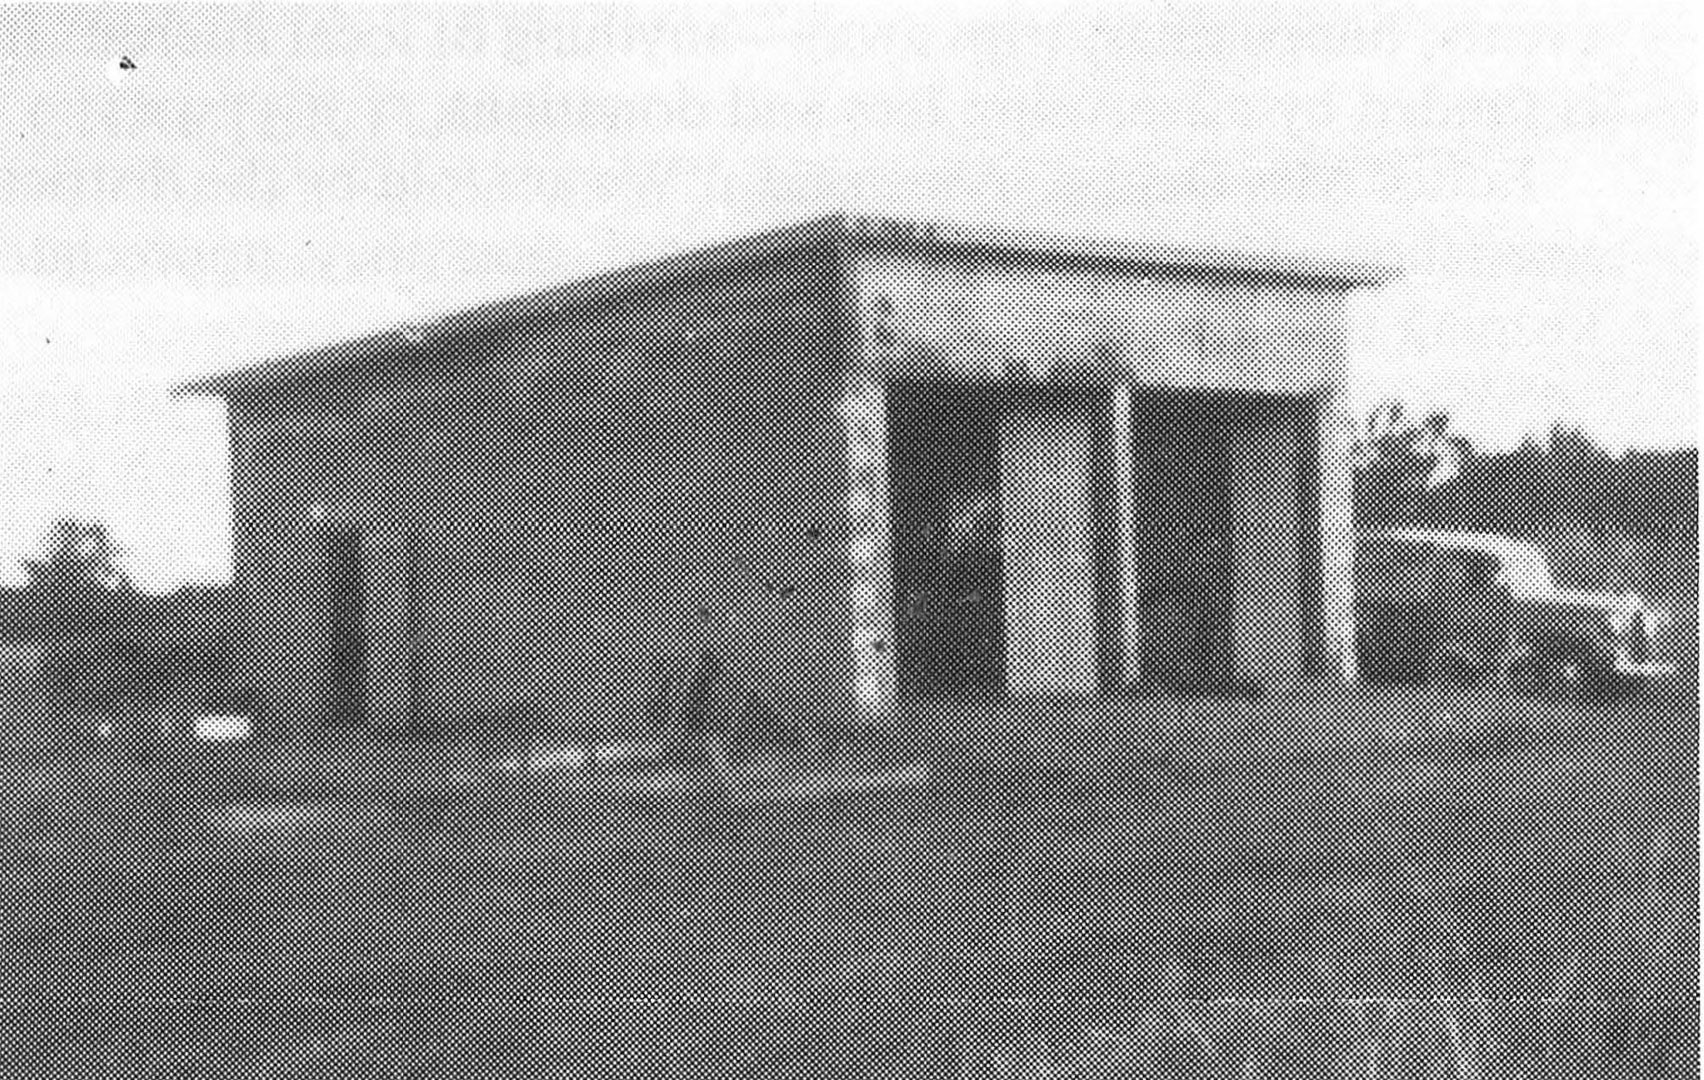 Eureka Motos' original premises in 1961.